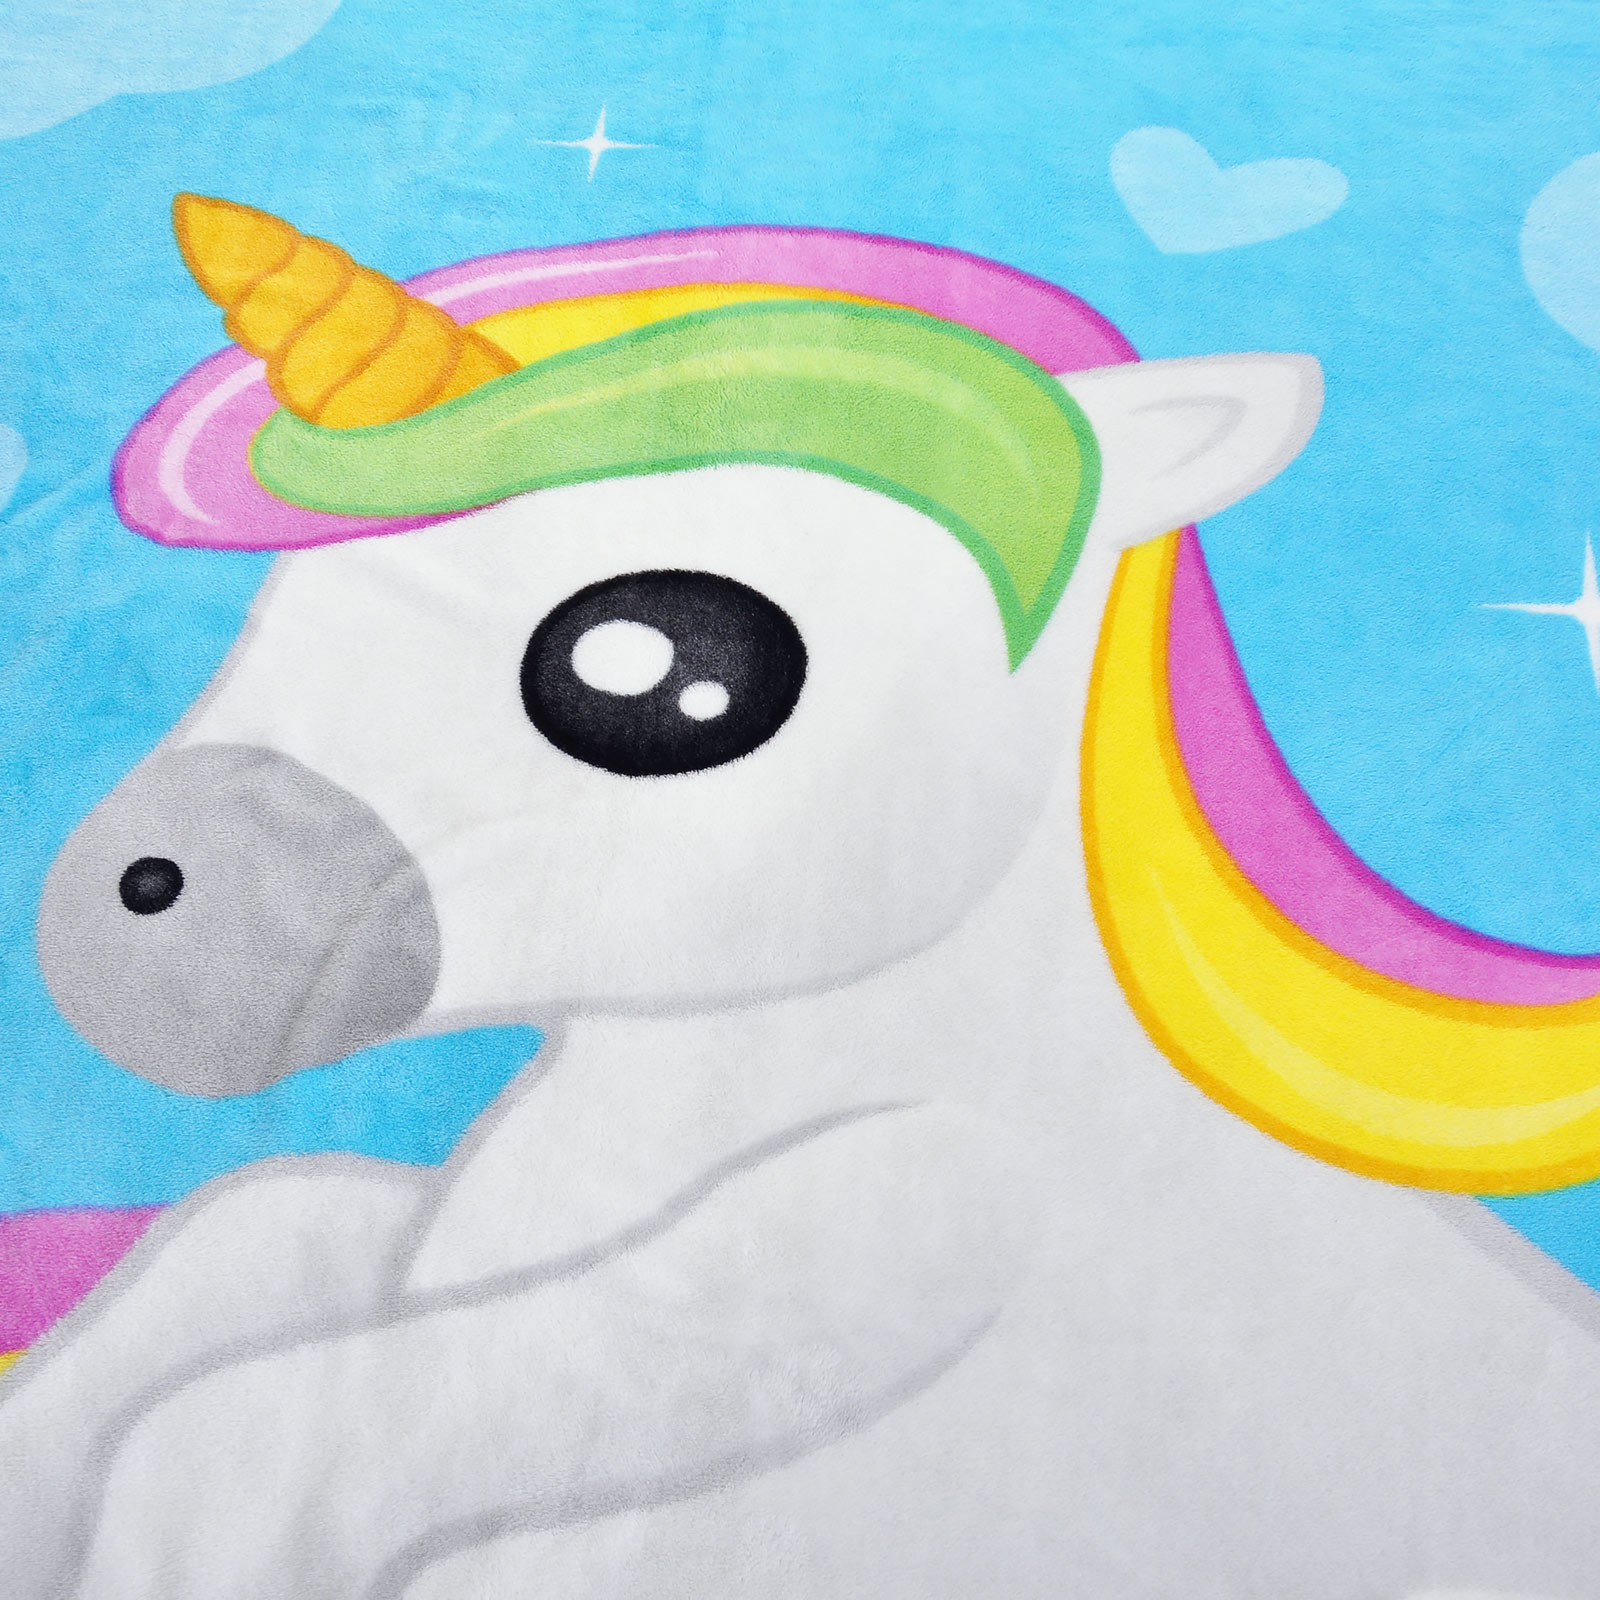 Fluffy blanket with unicorn